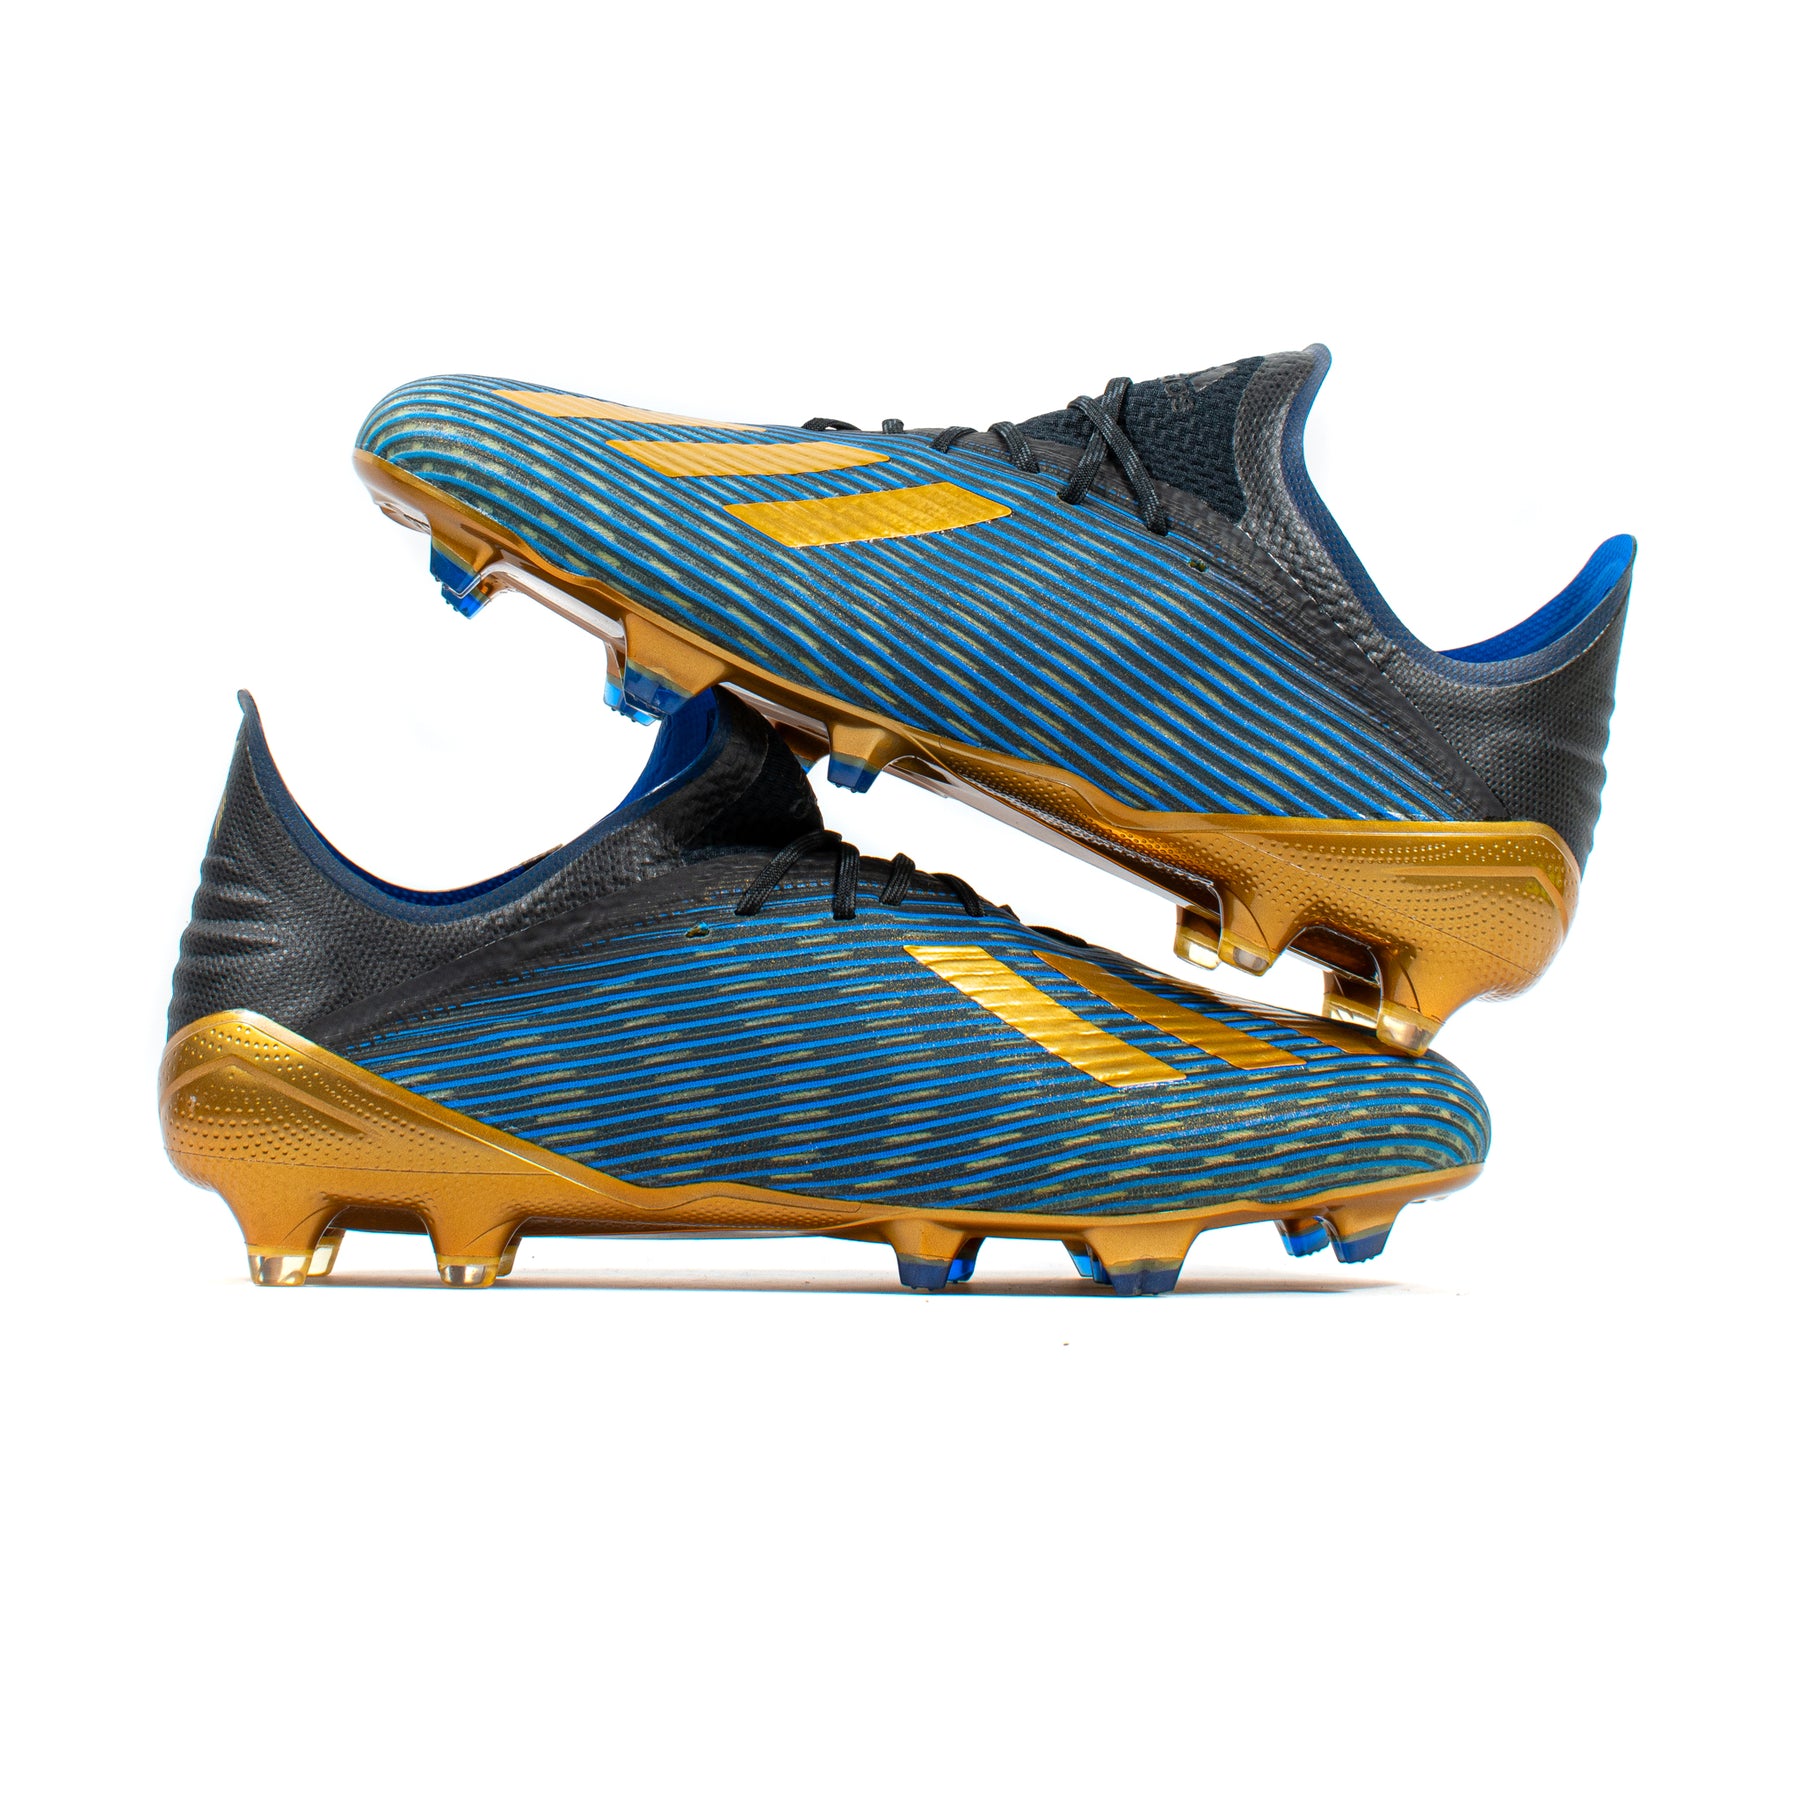 Perforar Ajustarse recoger Adidas X19.1 Blue Gold FG – Classic Soccer Cleats